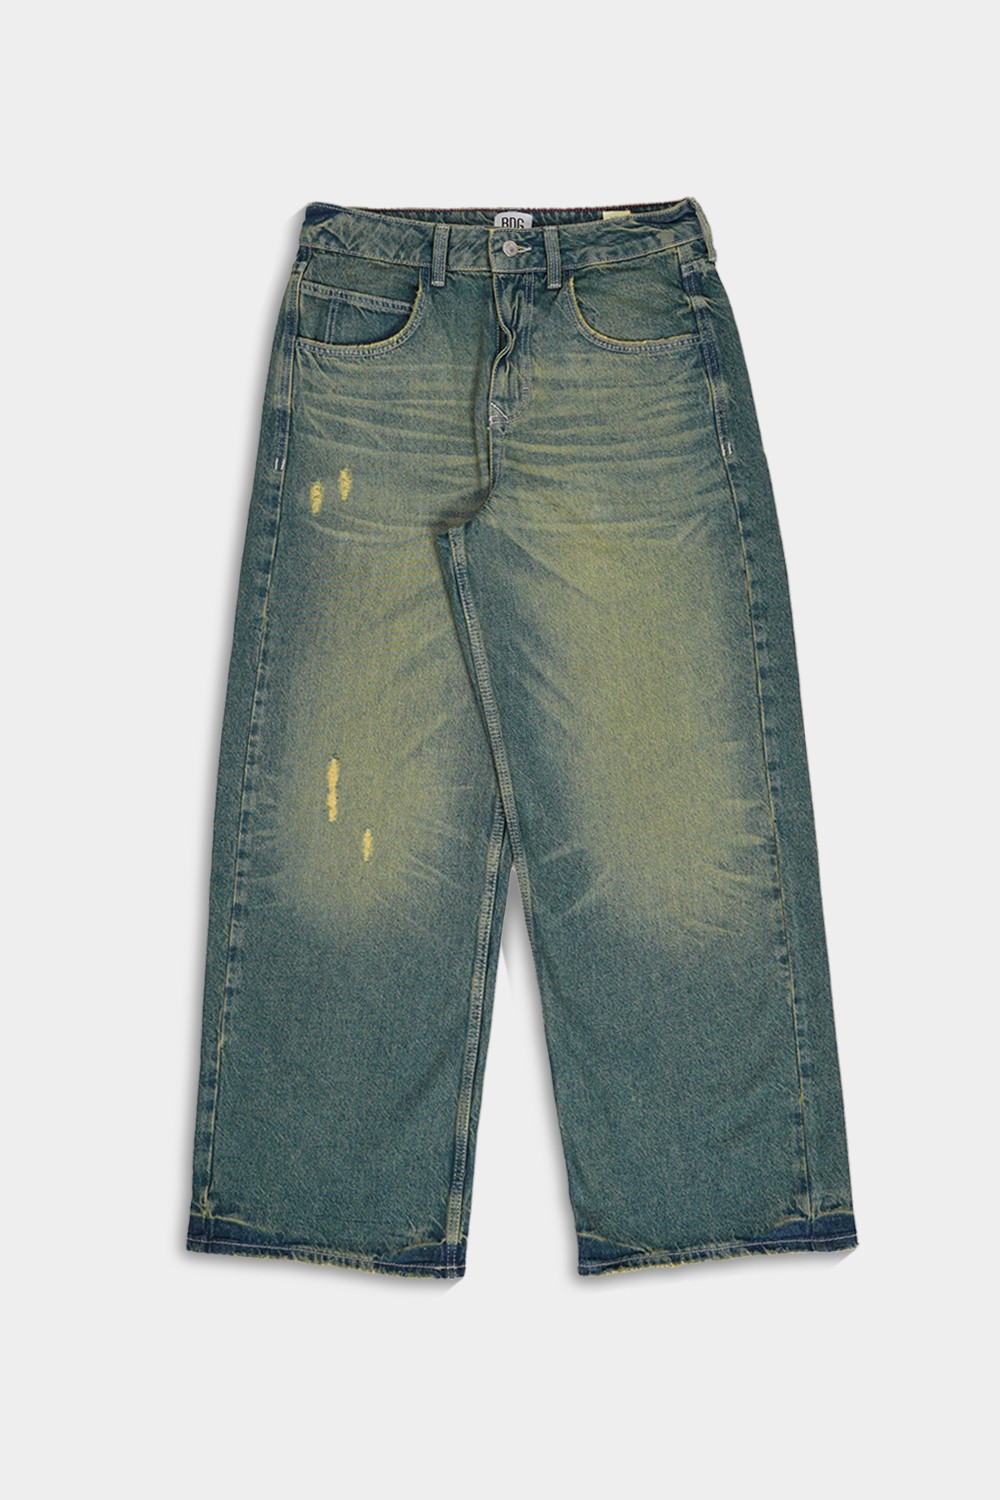 Dirty Green Jaya Baggy Jeans (URBN-B-234)